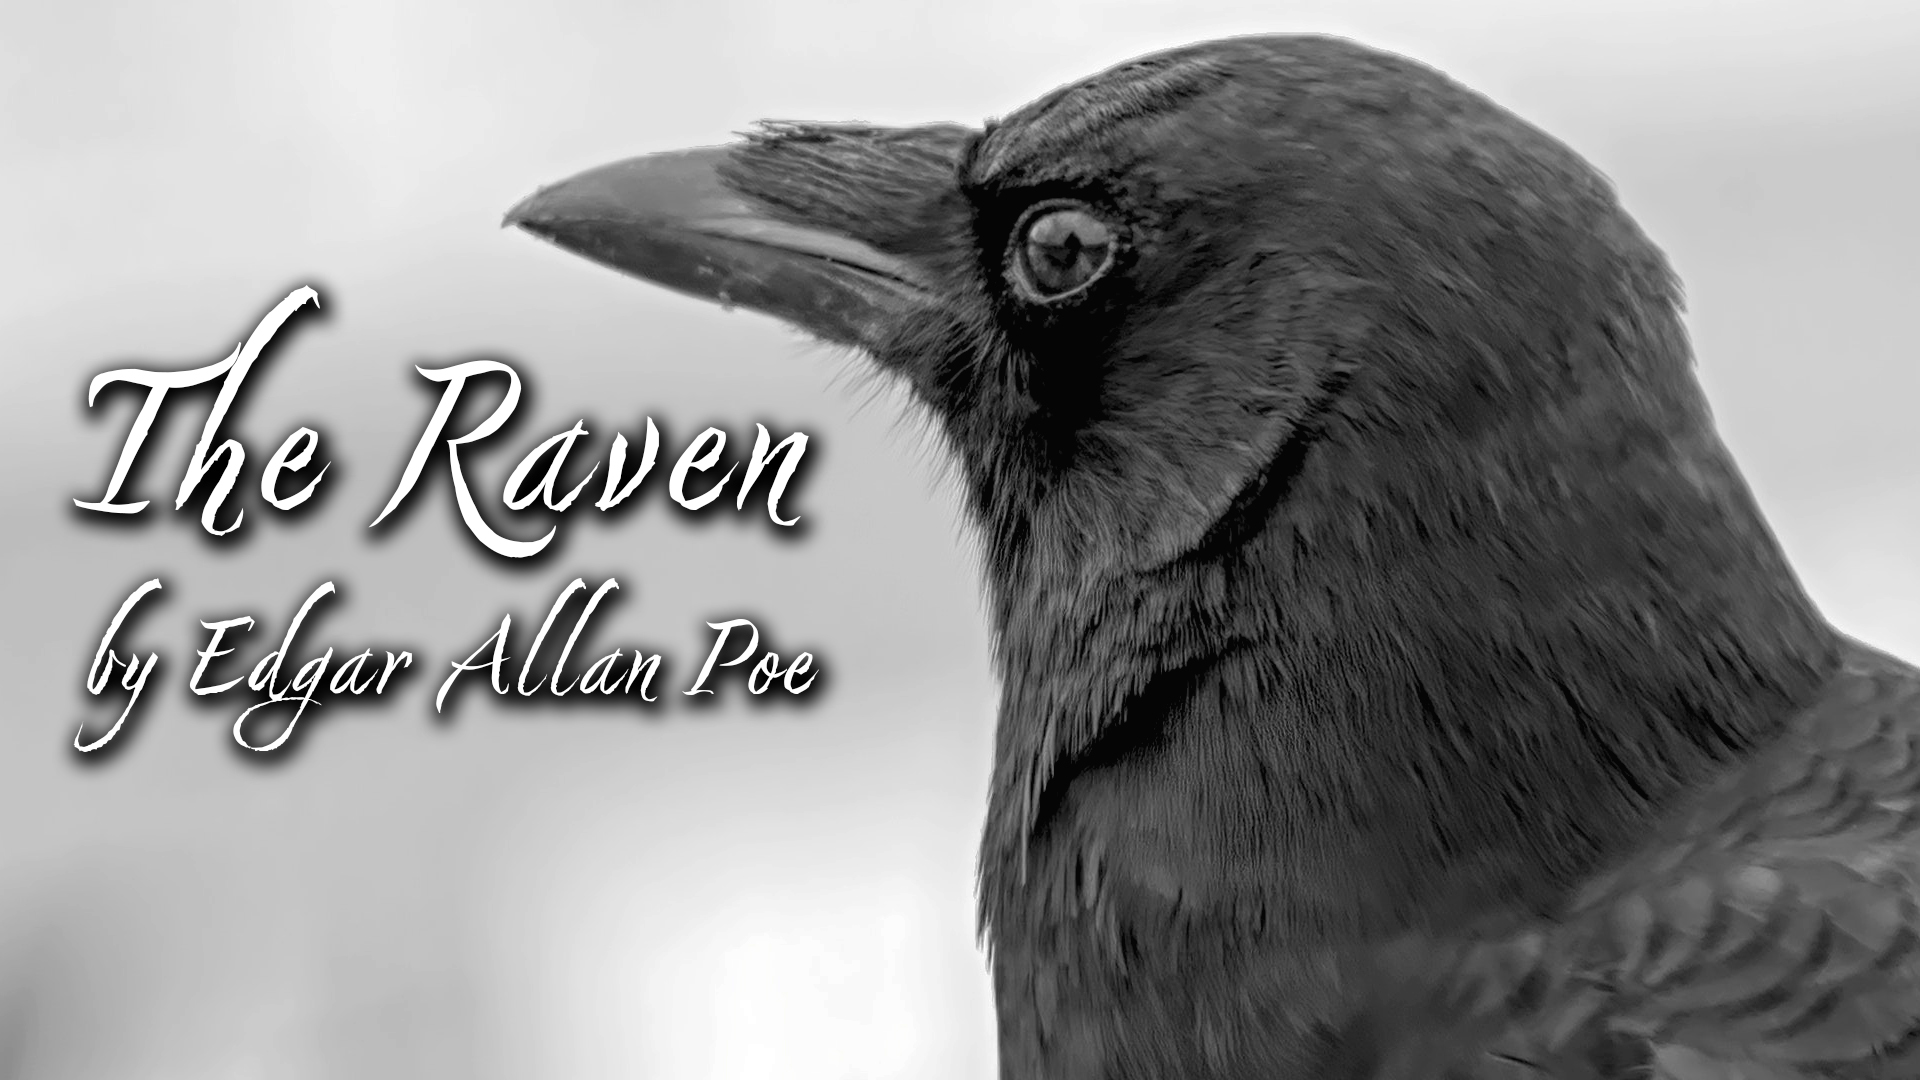 "The Raven" by Edgar Allan Poe, read by Zack Lawrence